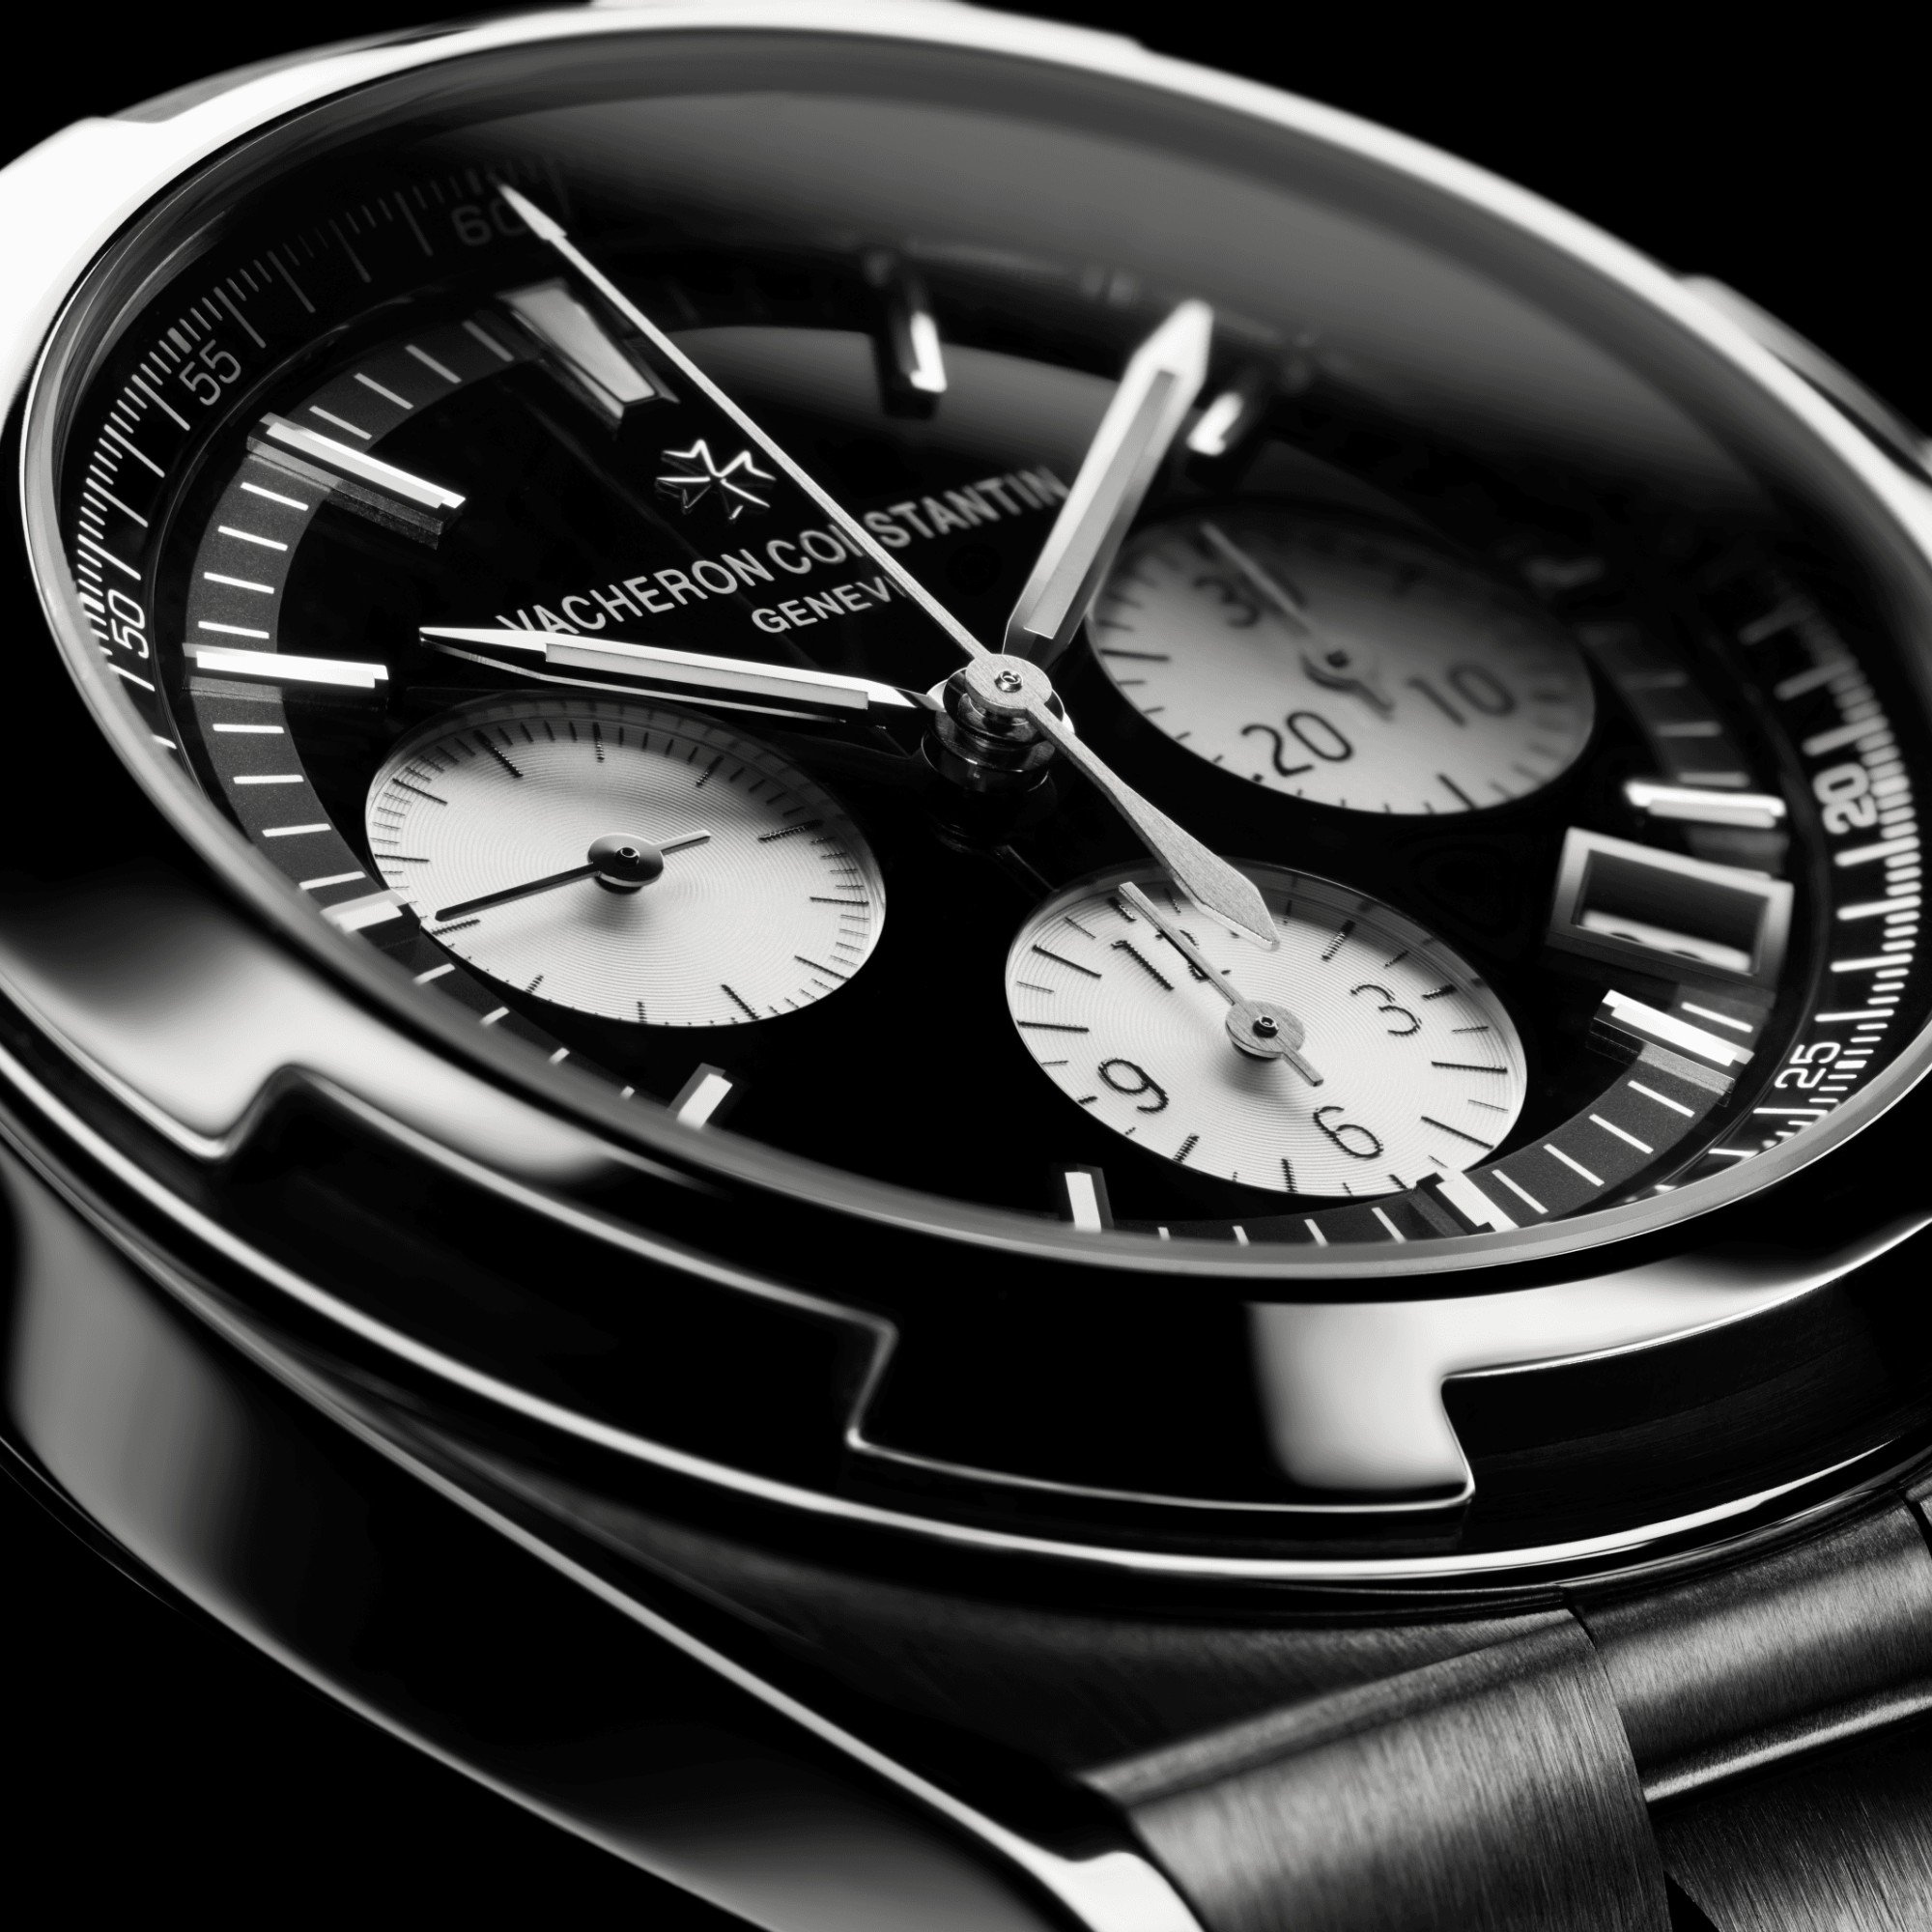 The Vacheron Constantin Reverse Panda Chronograph is a stunning watch